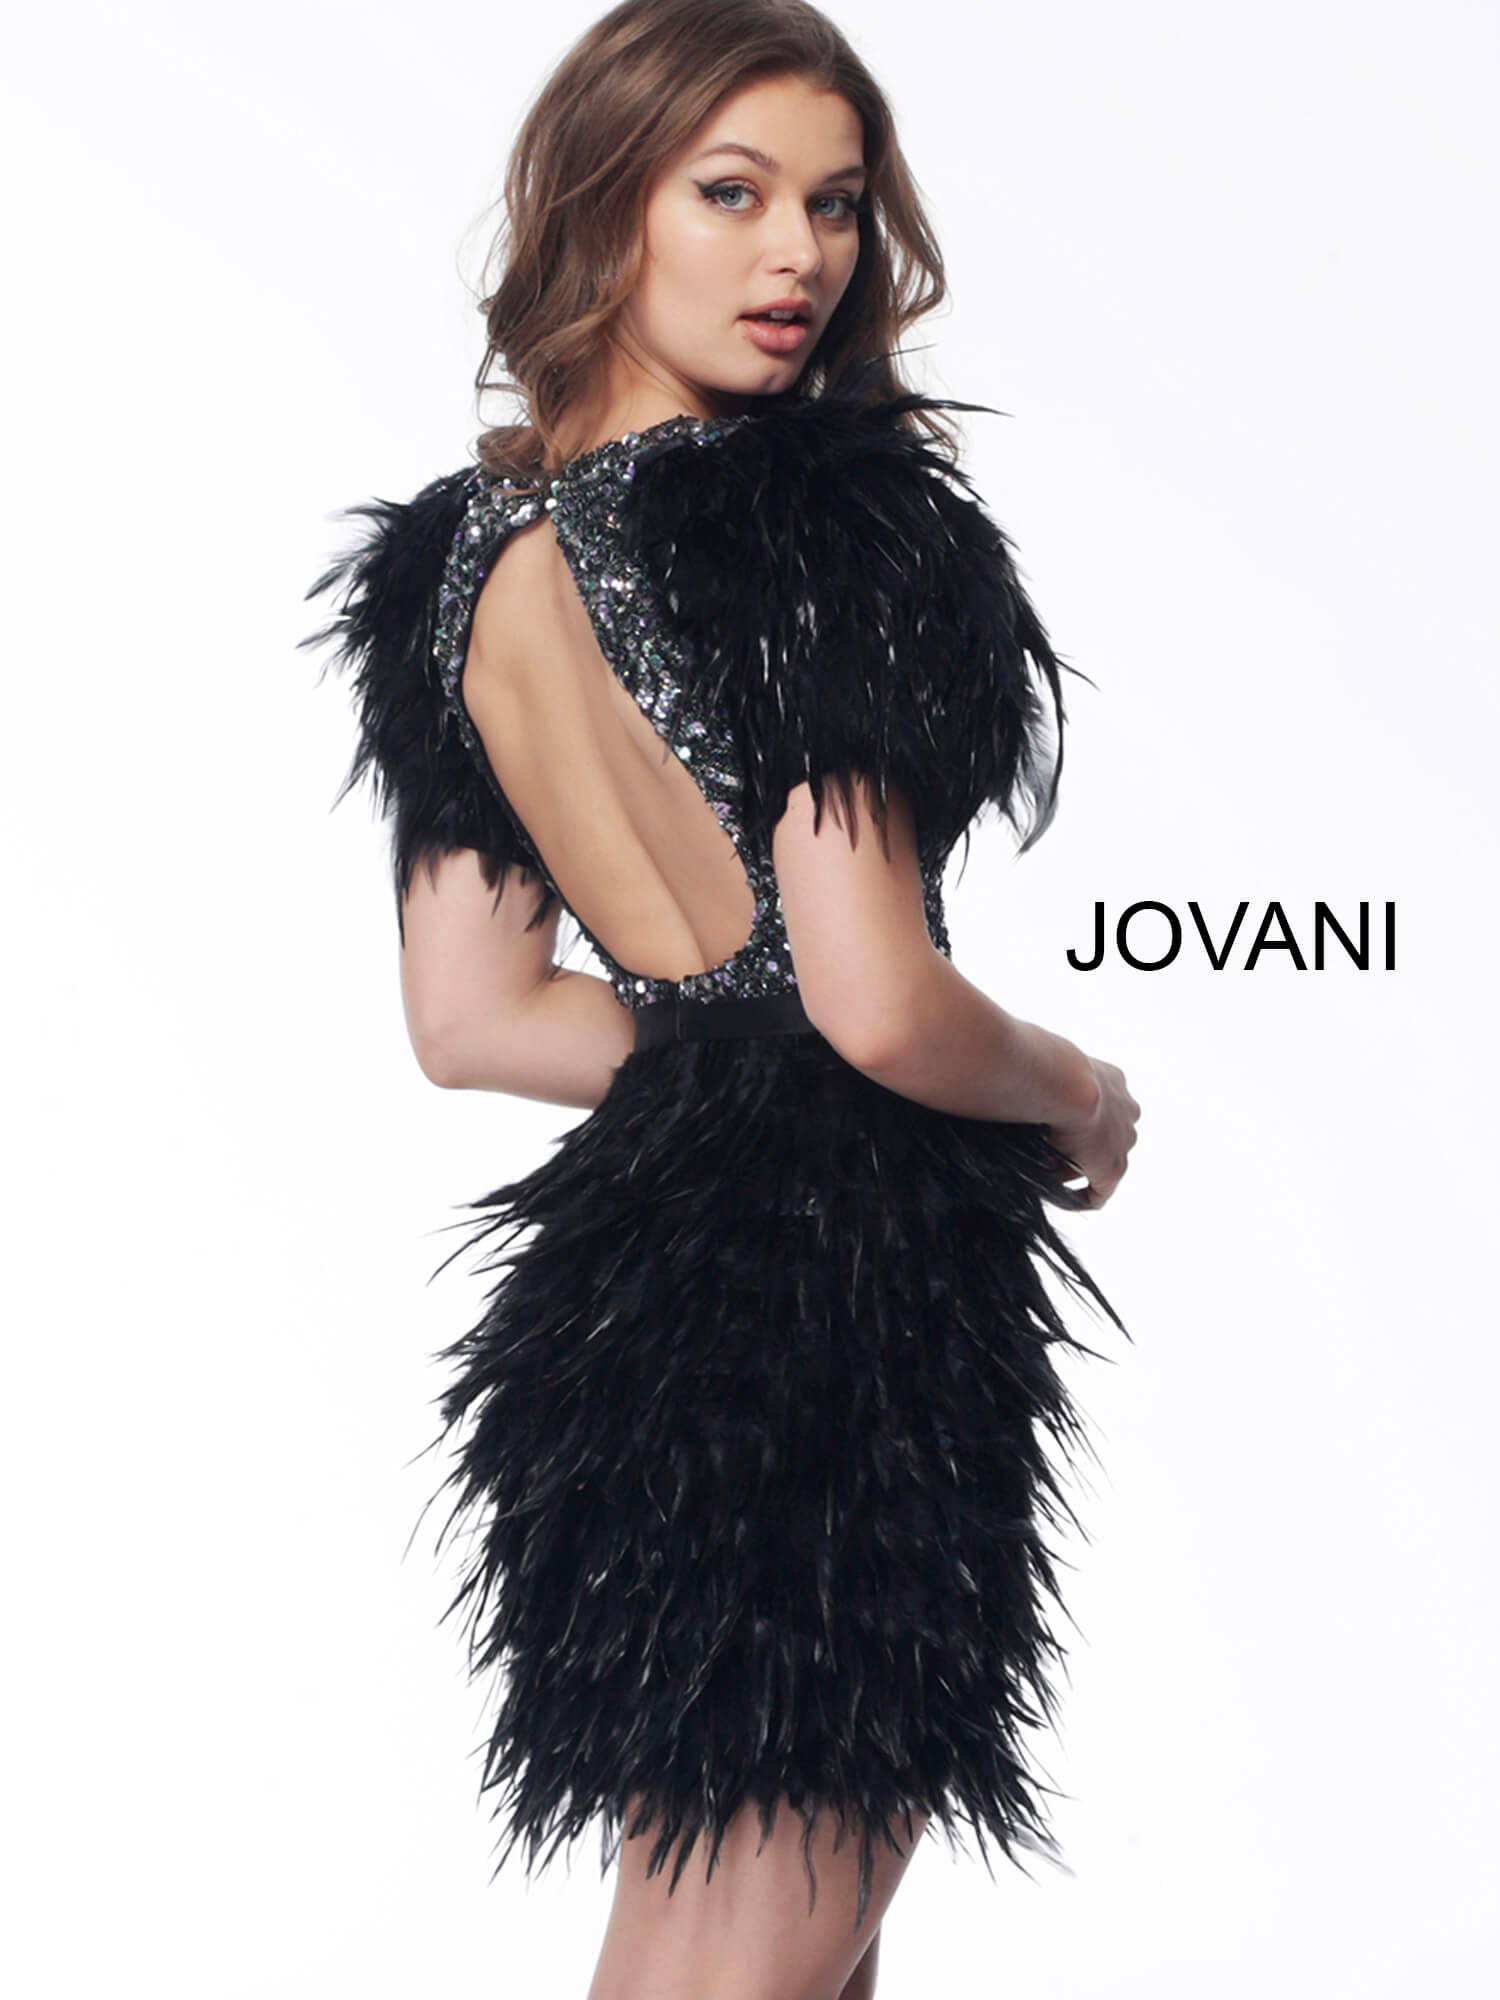 Jovani Black Feather Dress Outlet, 57 ...